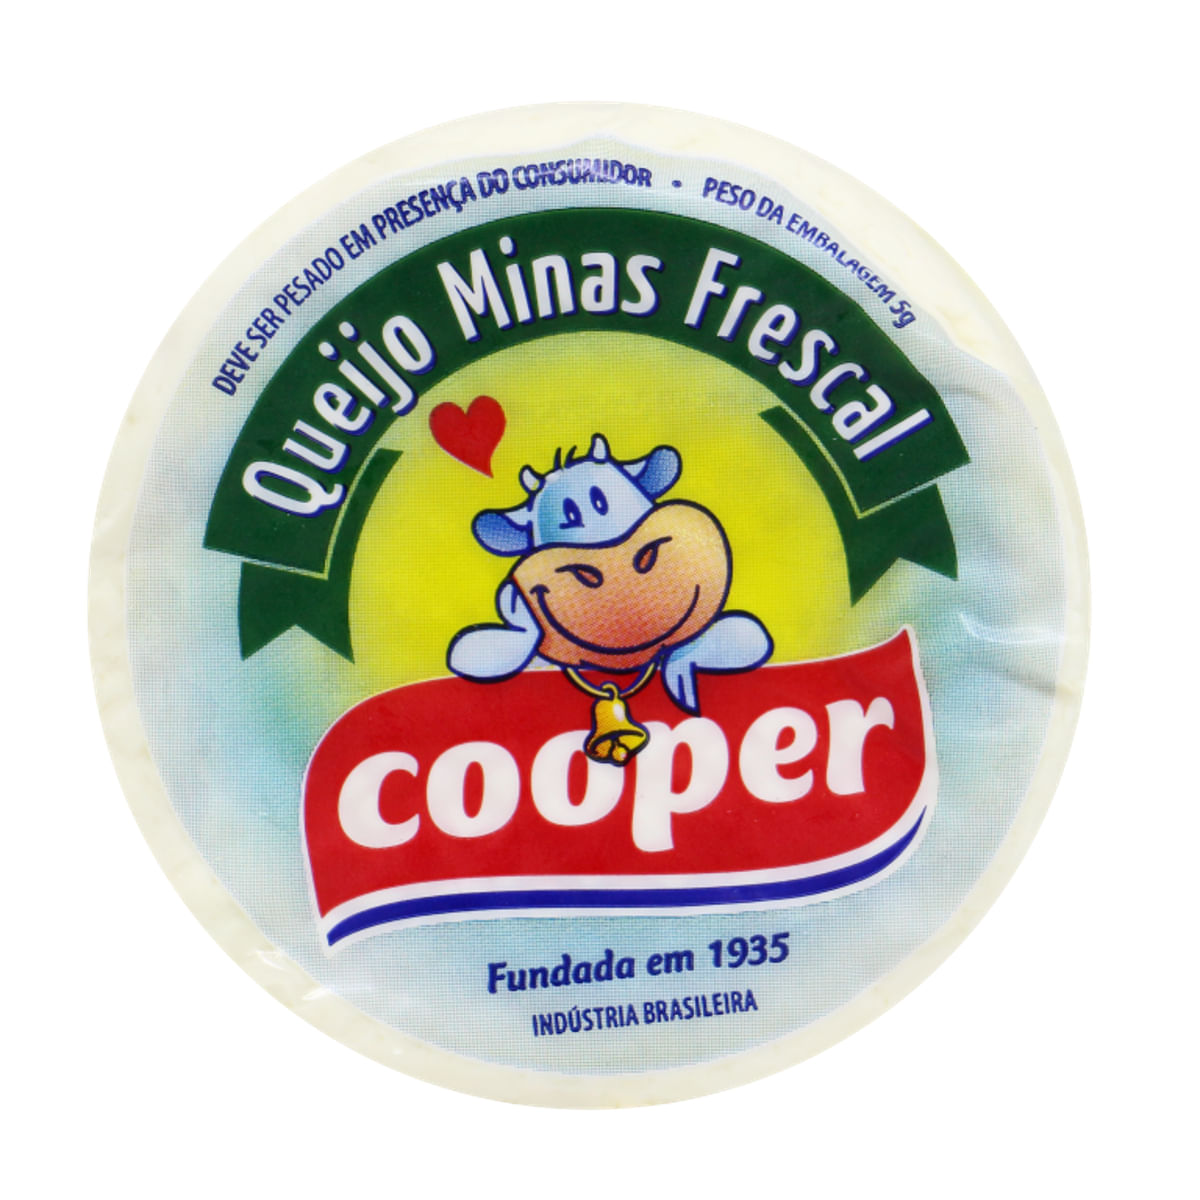 queijo-minas-frescal-cooper-kg-1.jpg